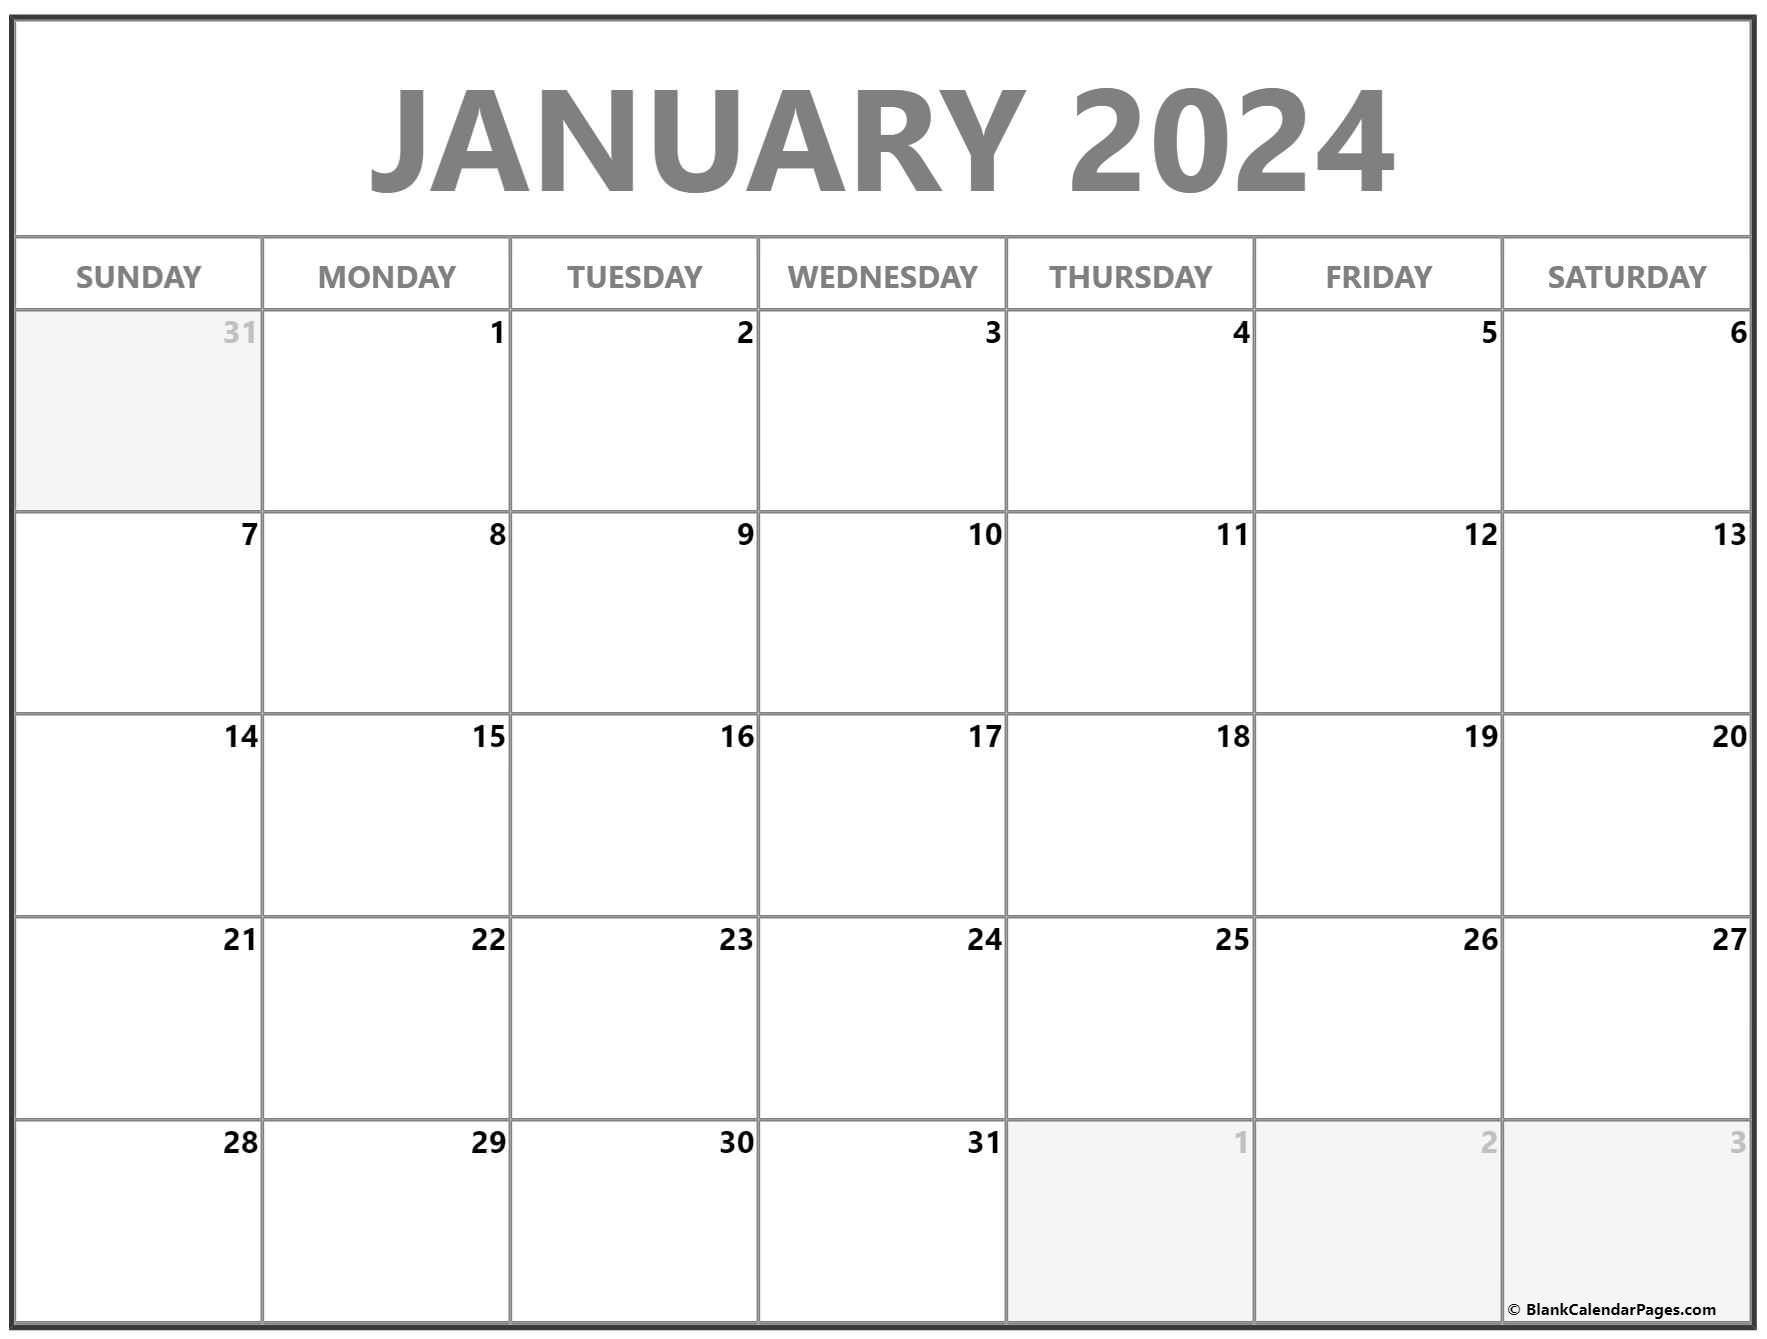 January 2023 calendar free printable calendar